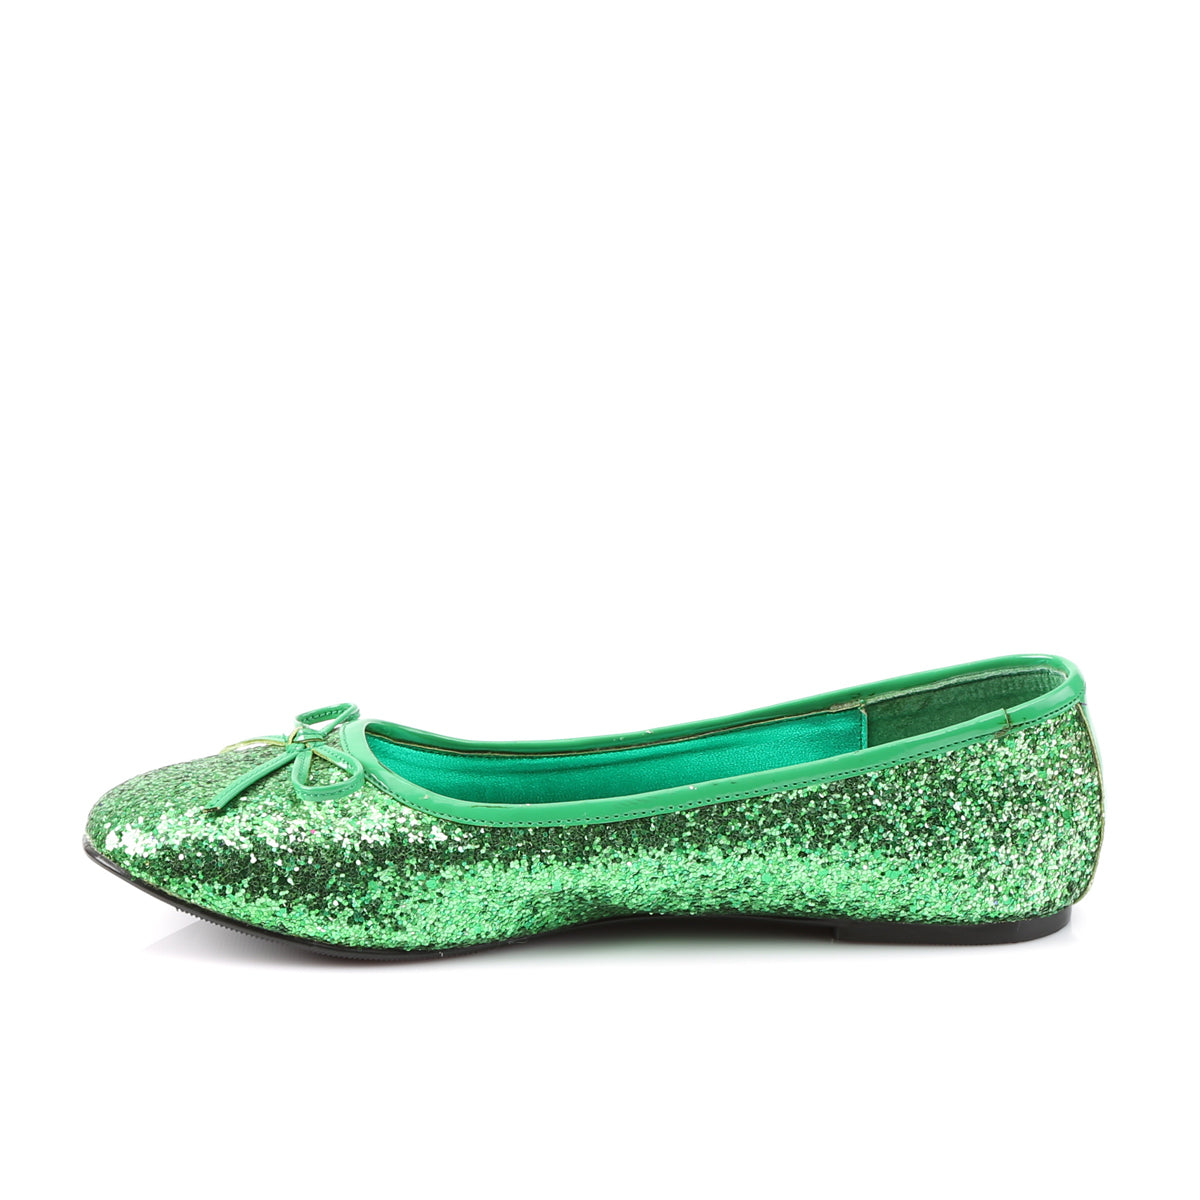 STAR-16G Funtasma Fantasy Green Gltr Women's Shoes [Fancy Dress Costume Shoes]